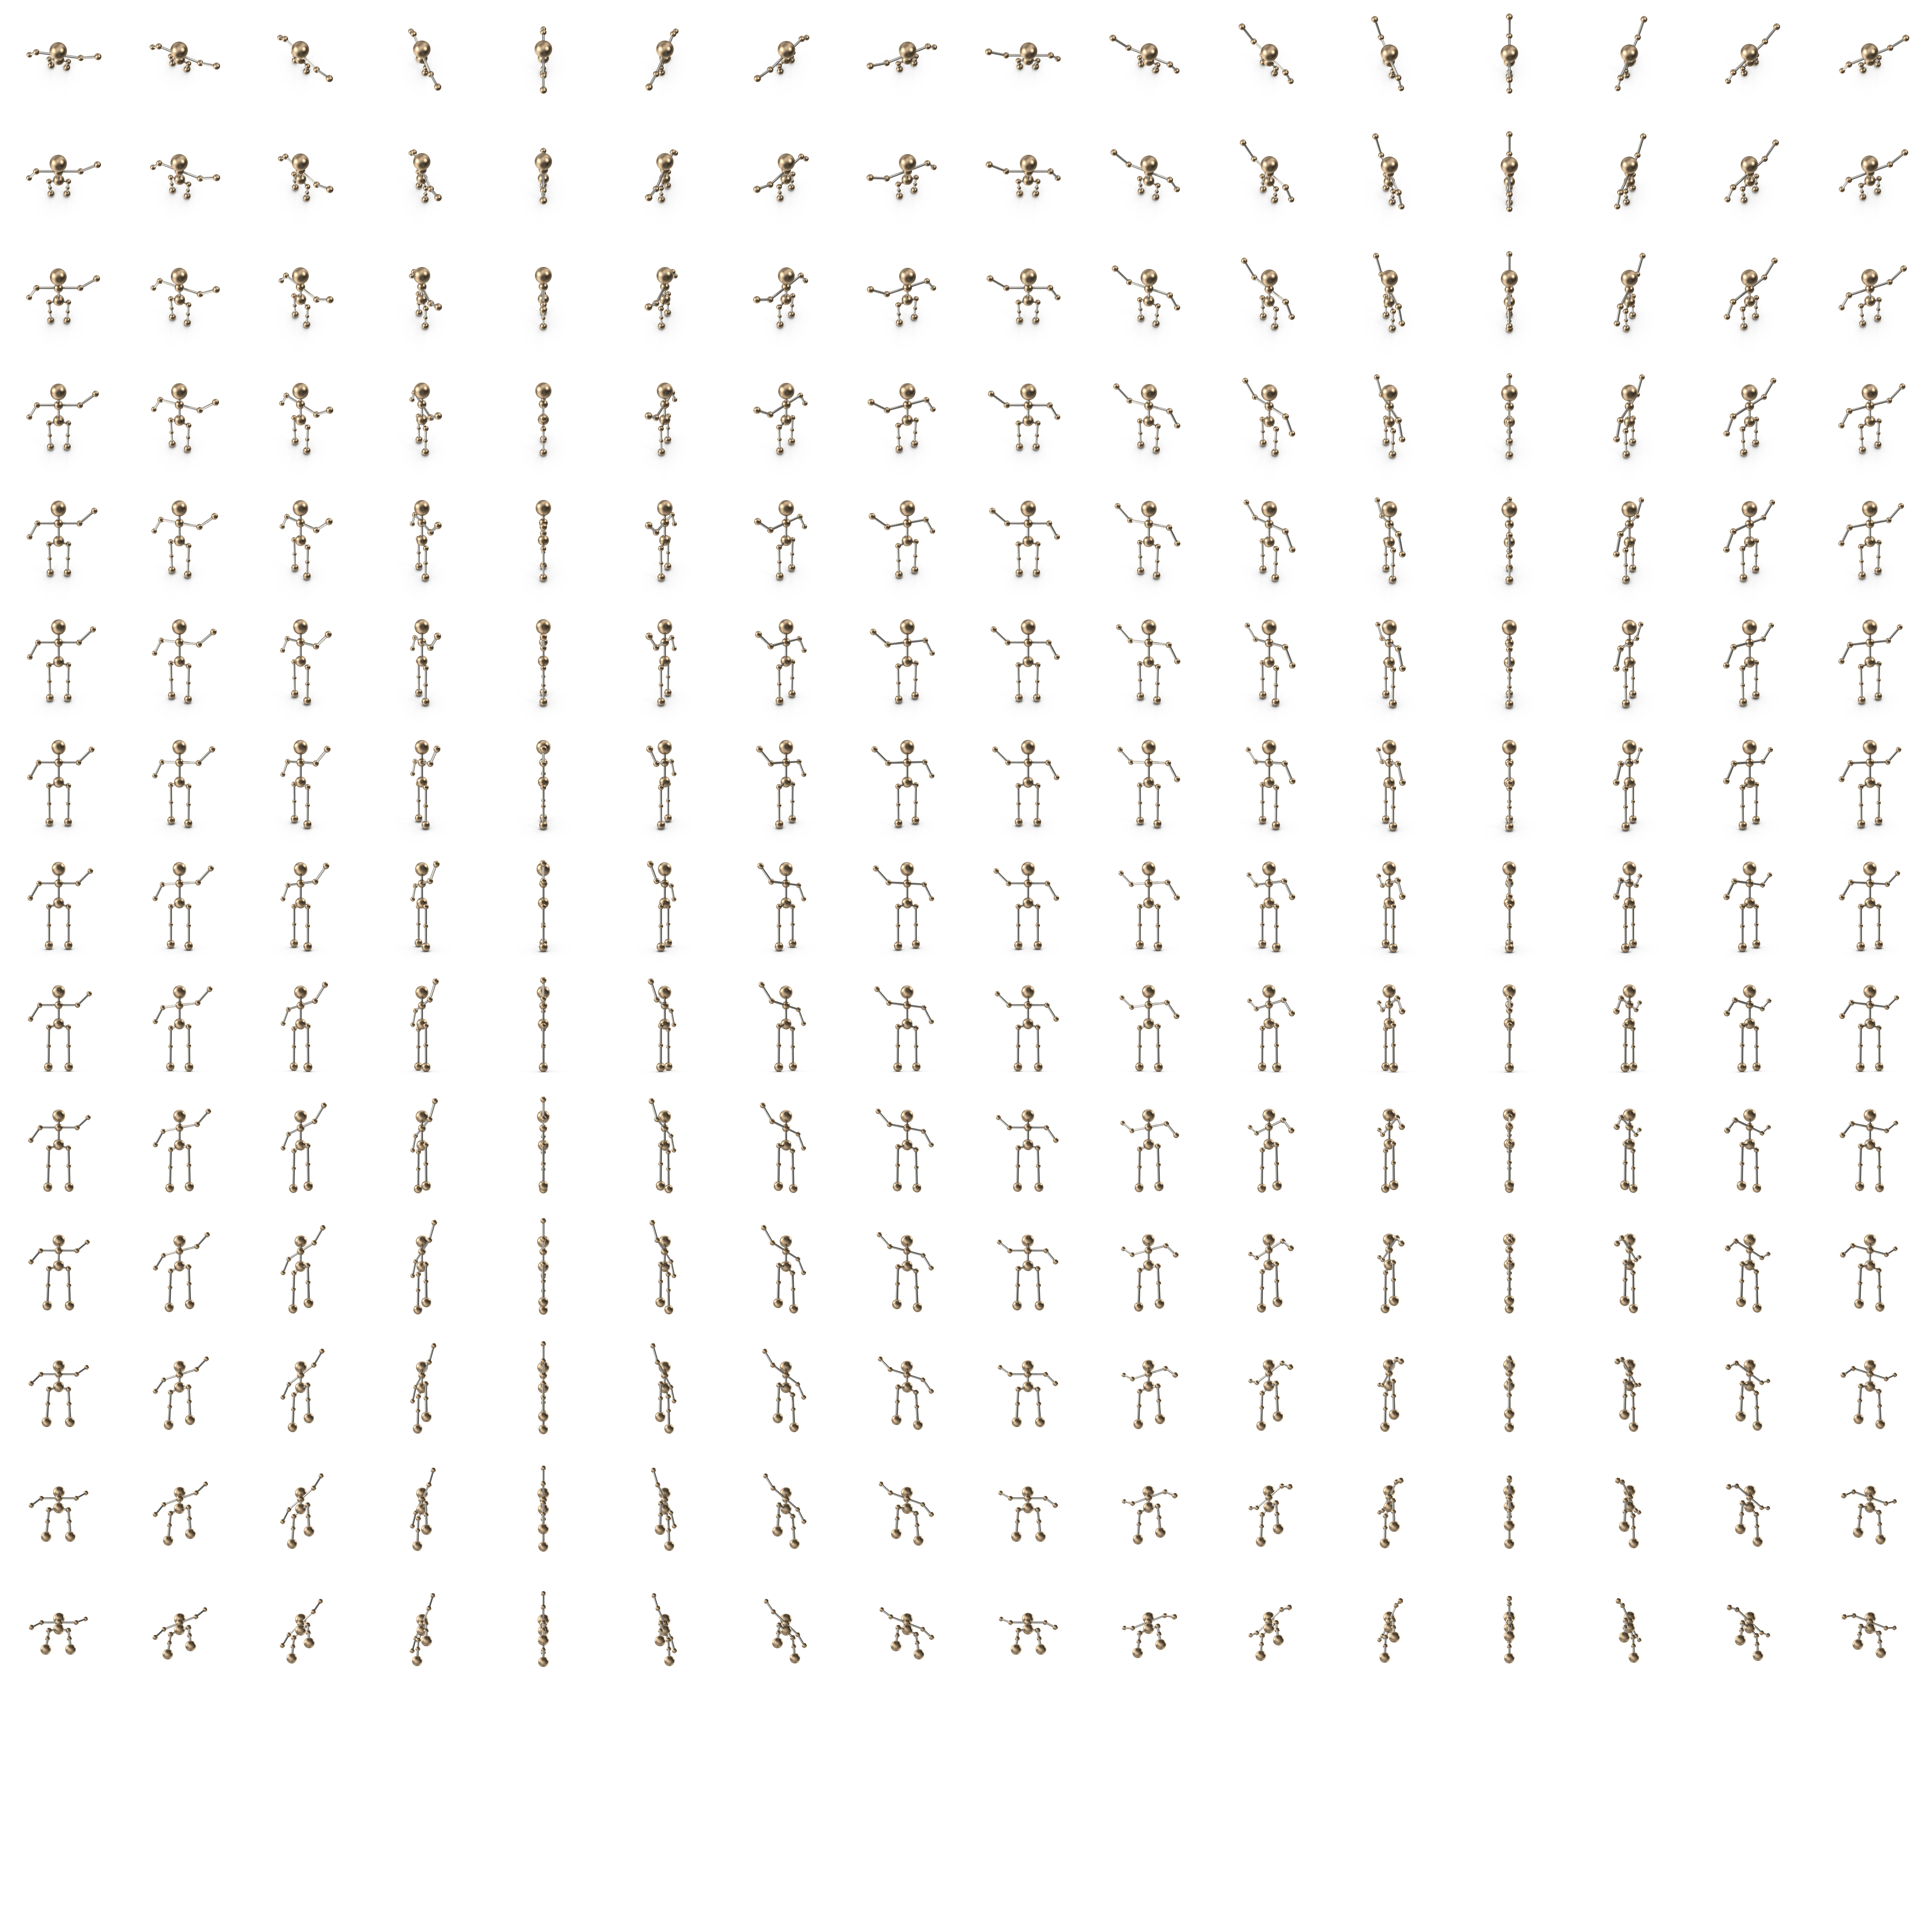 Stickman Fighting Stance 3D, Incl. stickman & pictogram - Envato